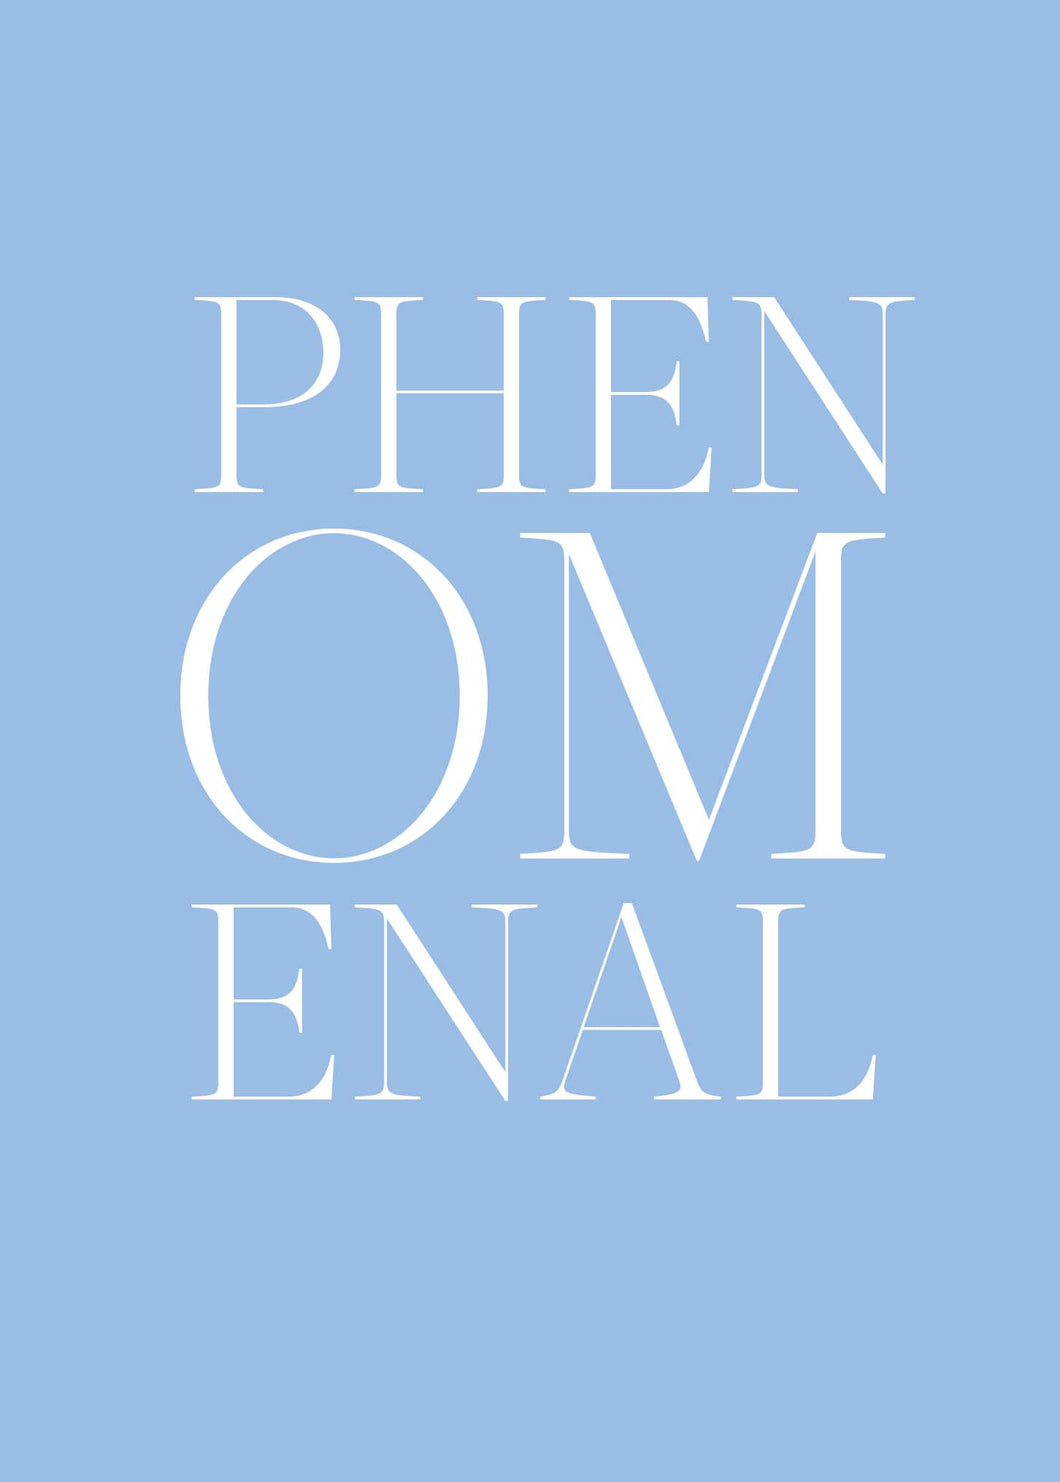 PHENOMENAL greetings card